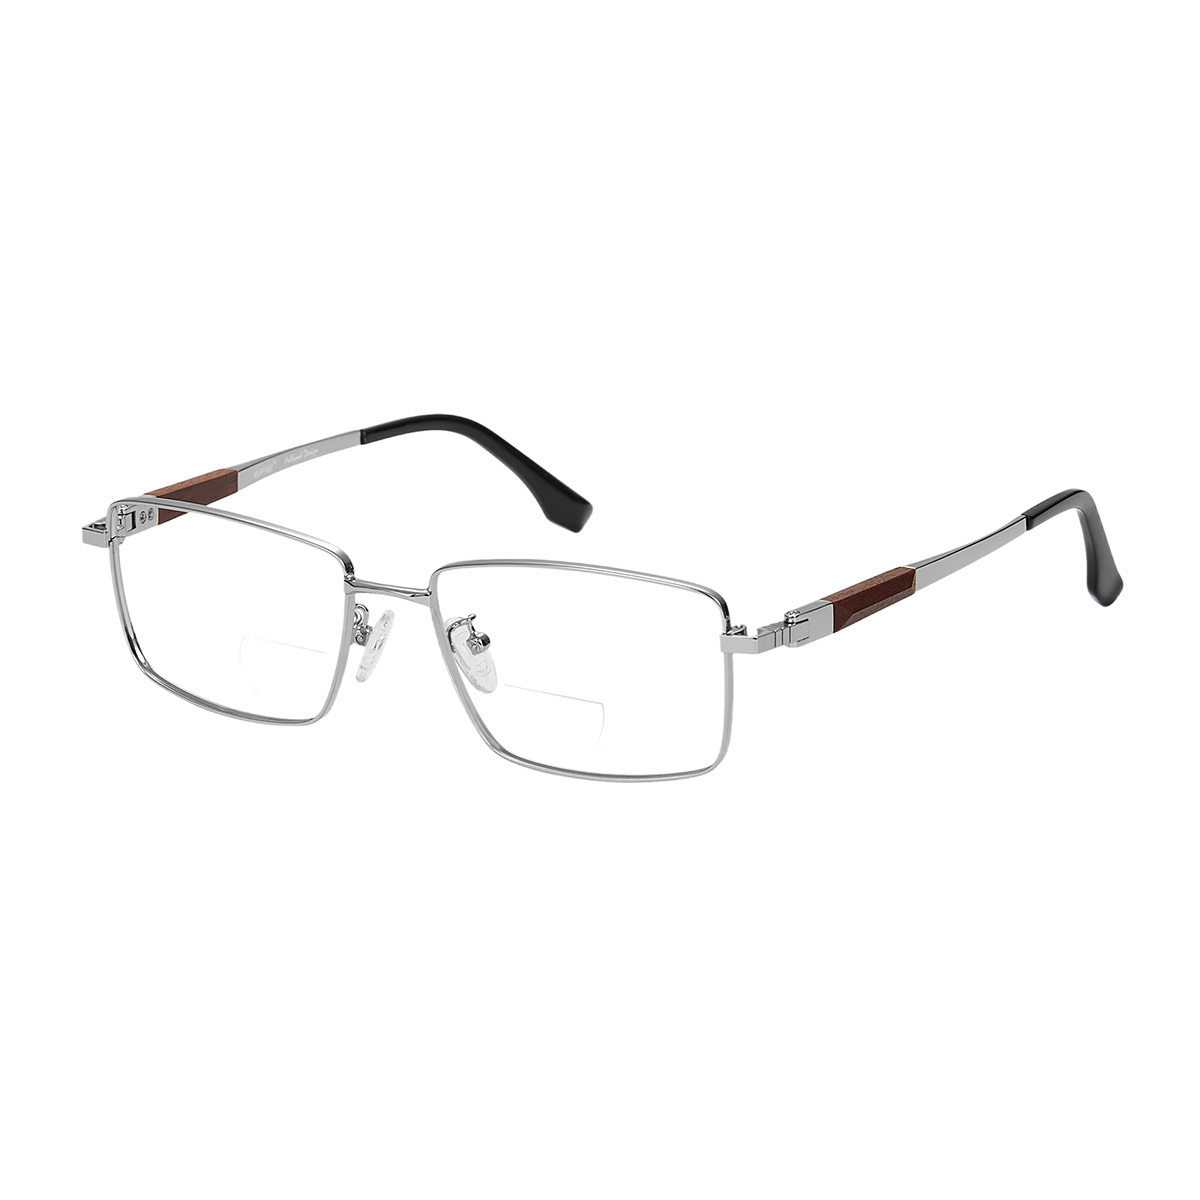 Amphion - Rectangle Silver Reading Glasses for Men